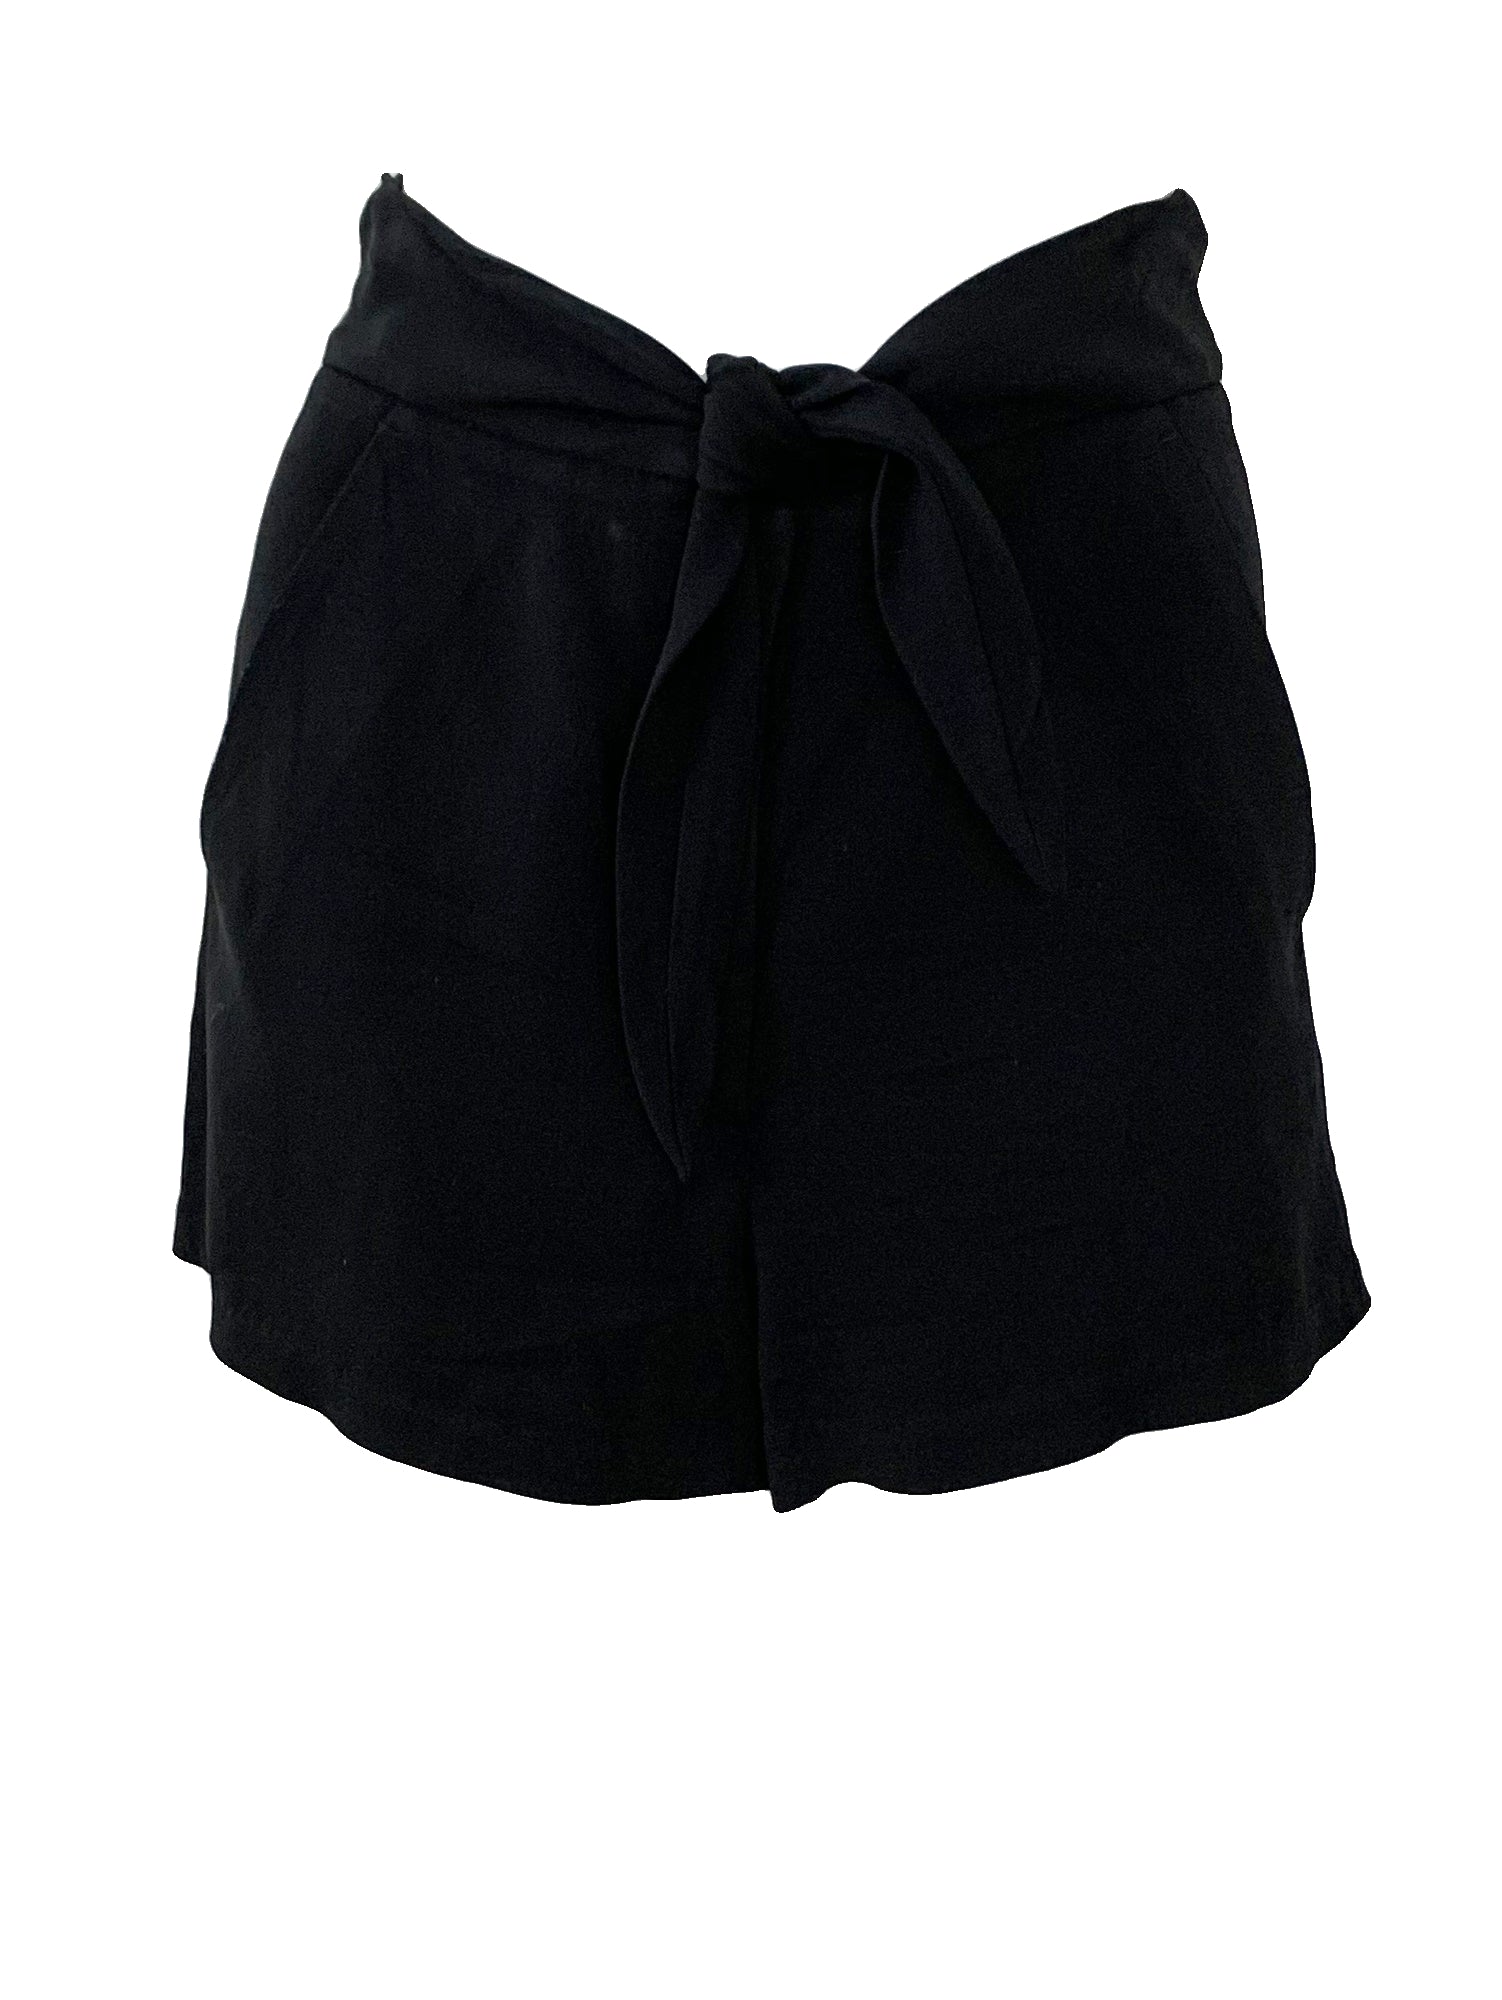 Kerry Tie Waist Shorts Size 0